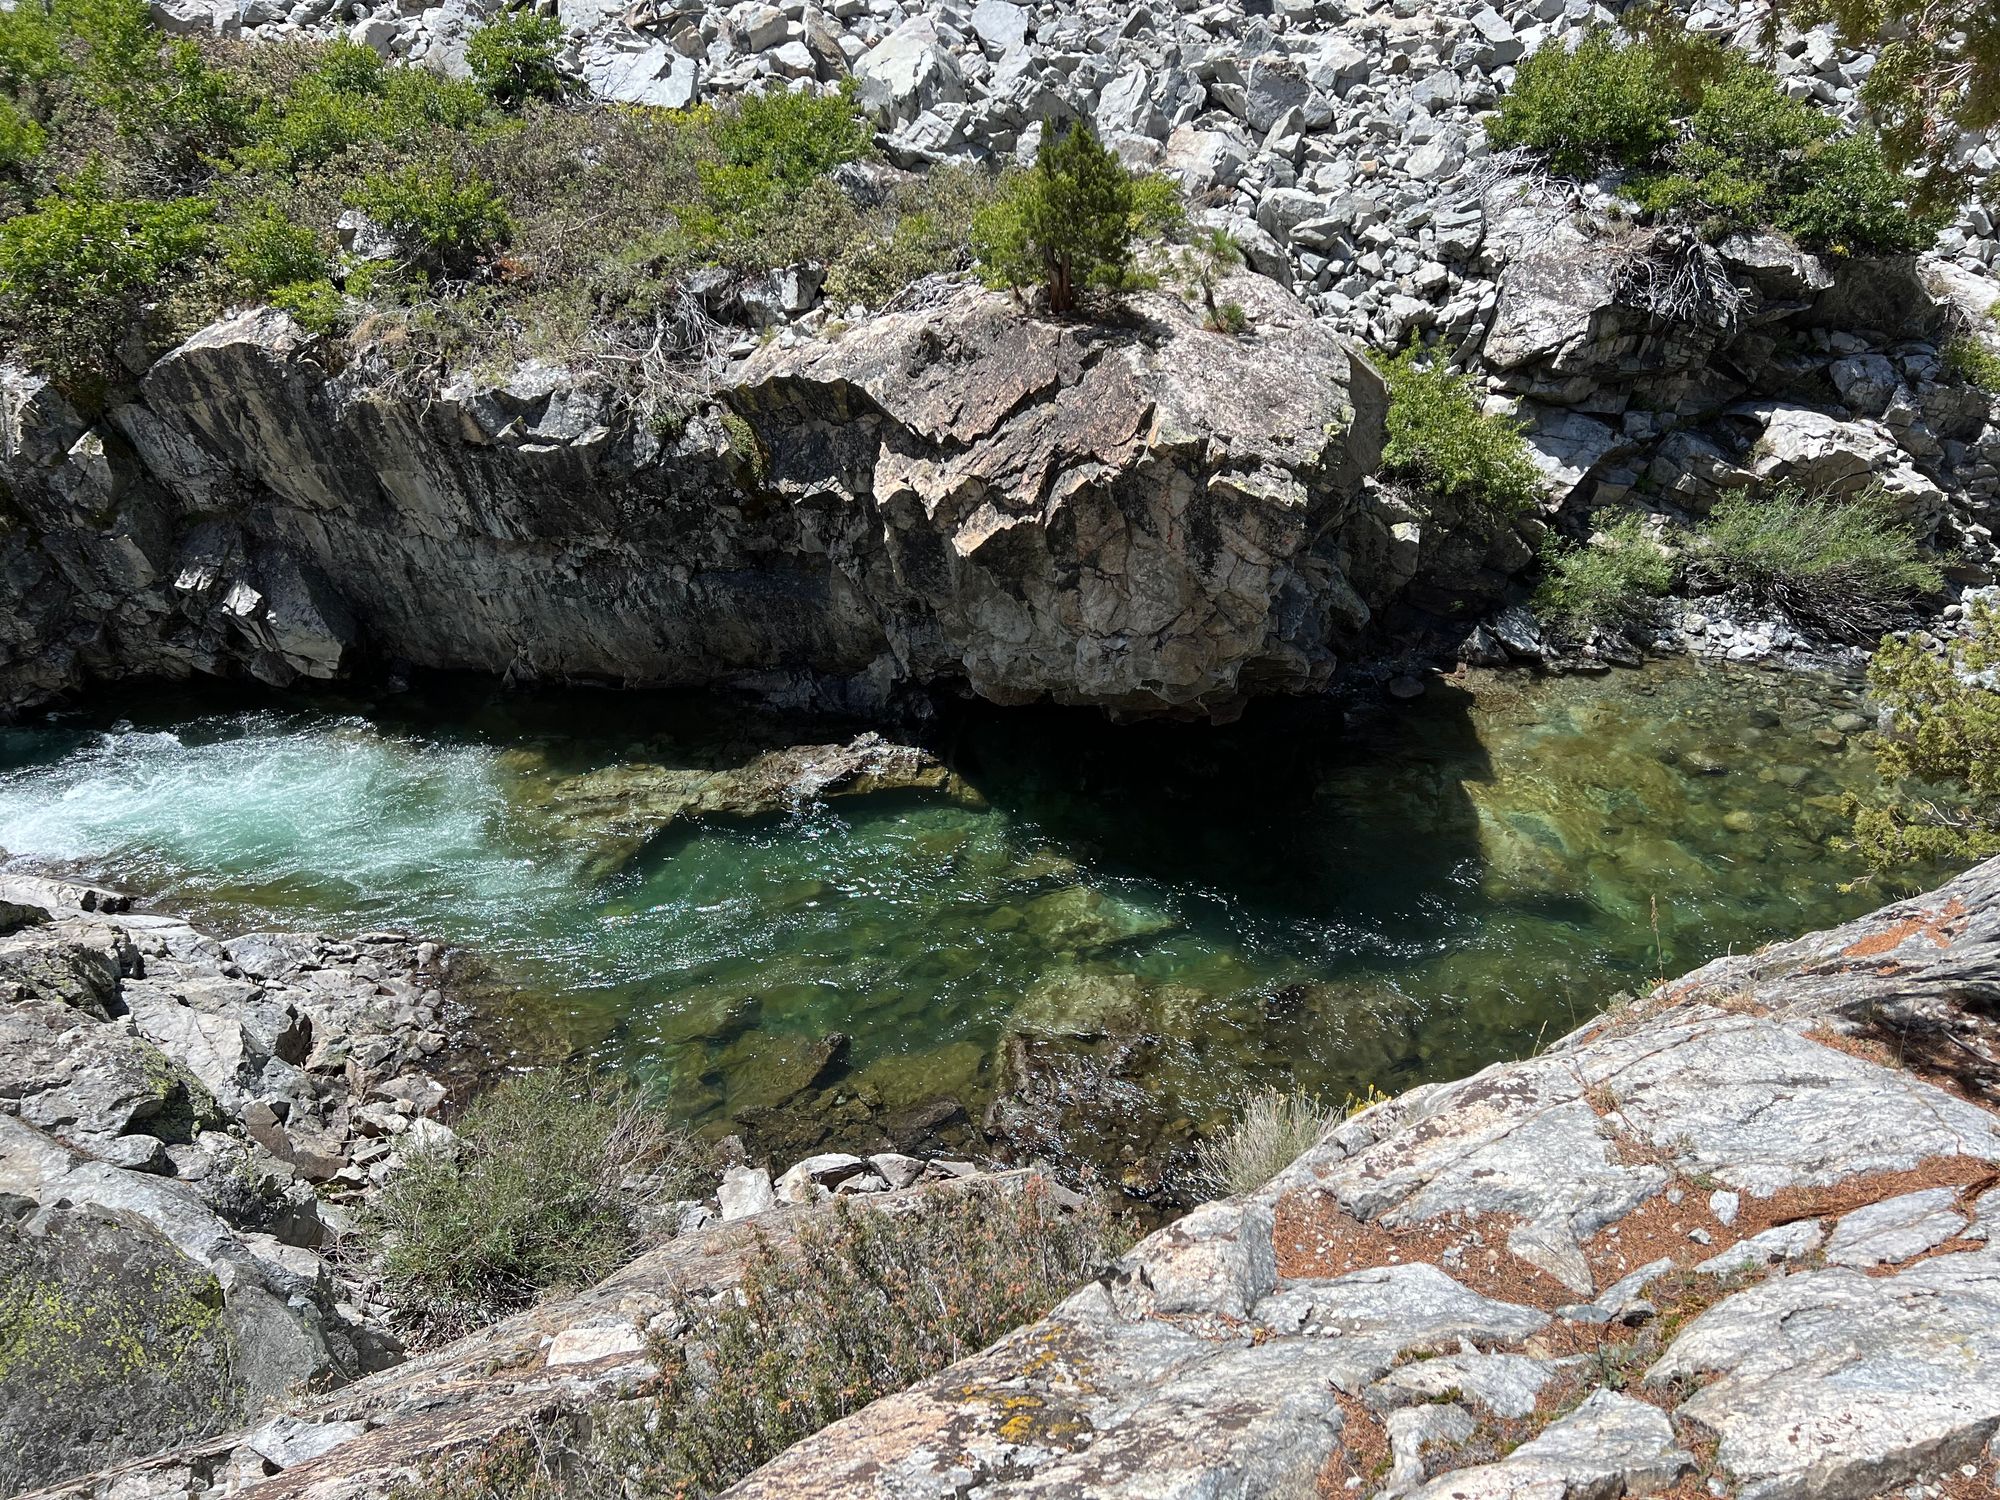 A river flowing between tall rock walls.